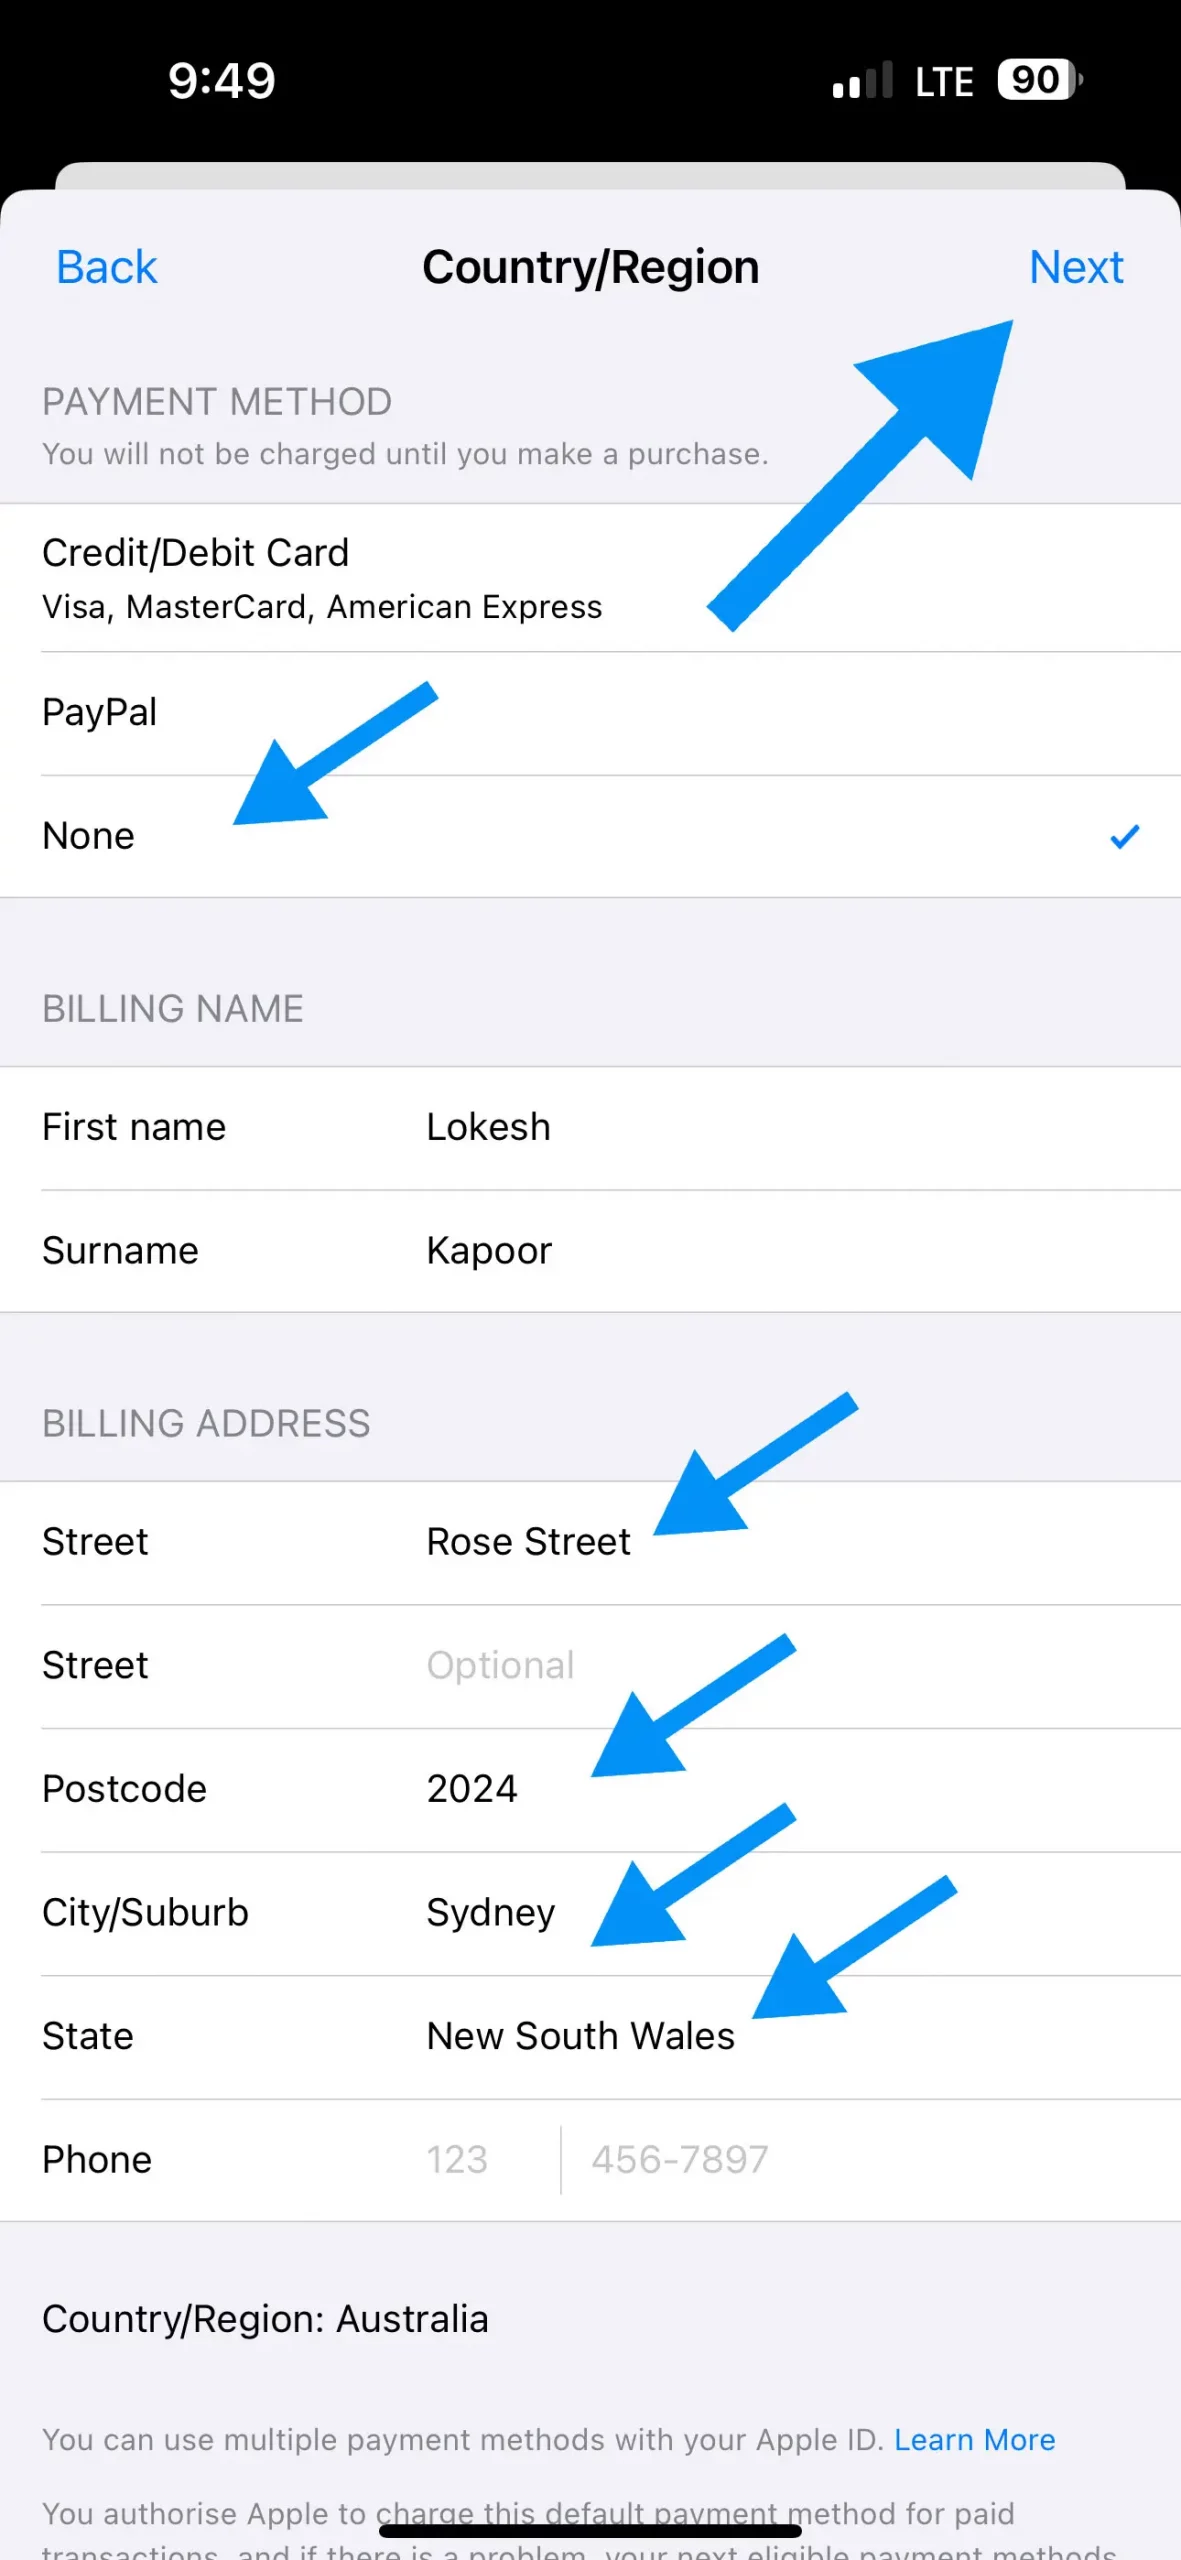 Appstore Payment Method & Billing Details